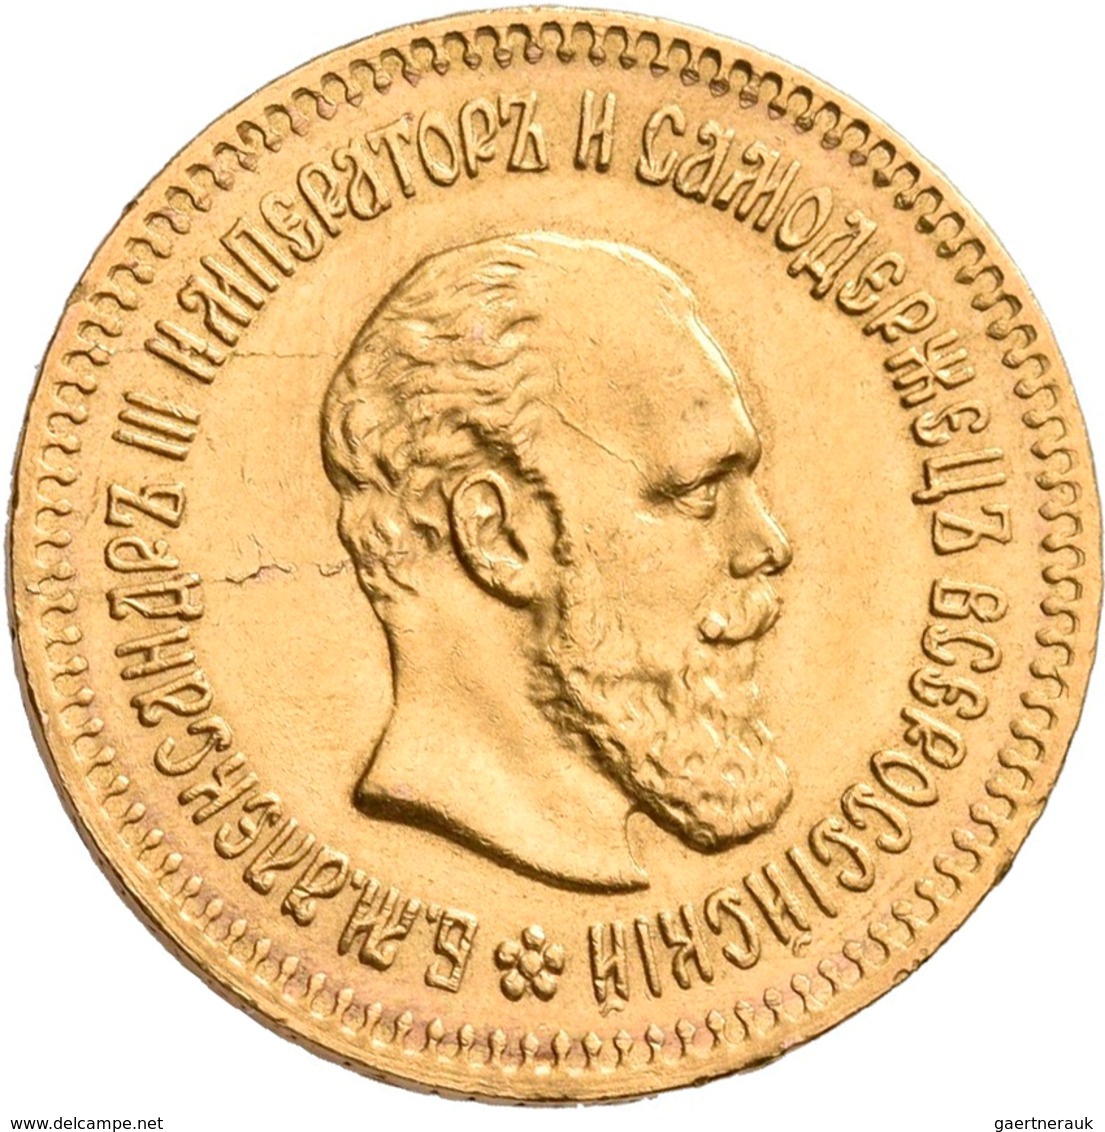 Russland - Anlagegold: Alexander III. 1881-1894: 5 Rubel 1888 АГ, KM Y# 42, Friedberg 168. 6,43 G, 9 - Russia